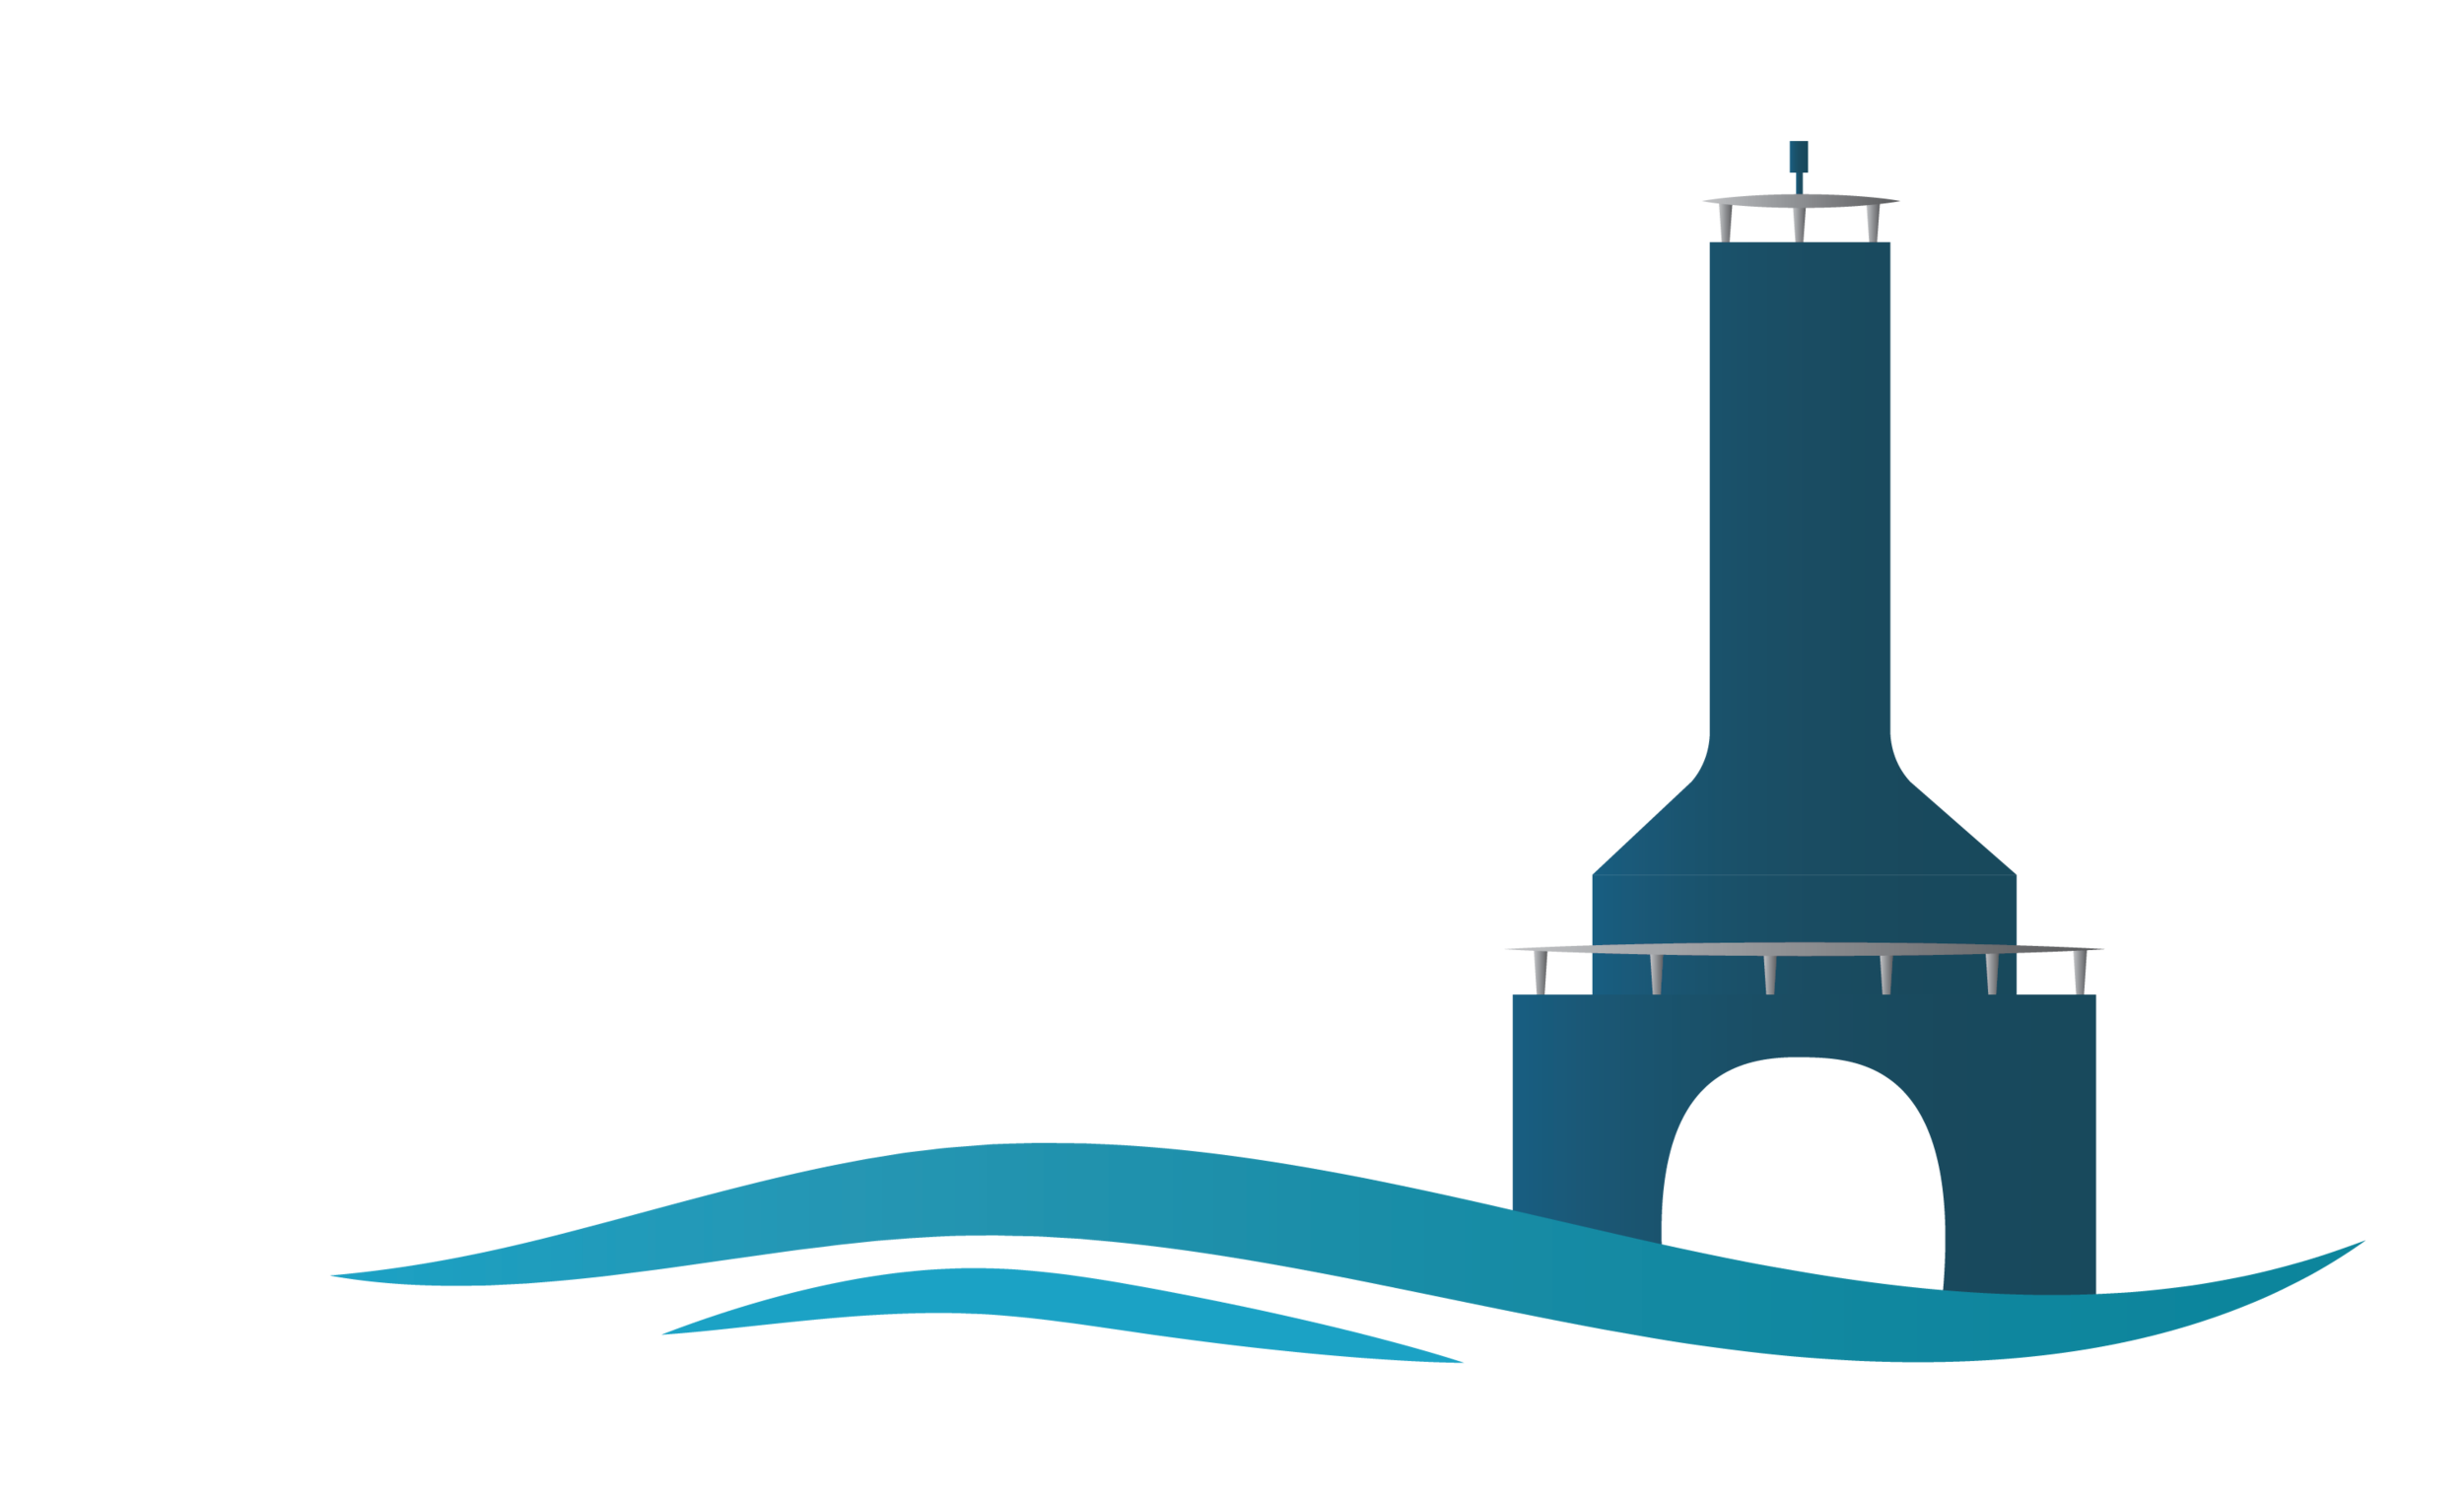 NEWPORT PARTNERS WEALTH MANAGEMENT